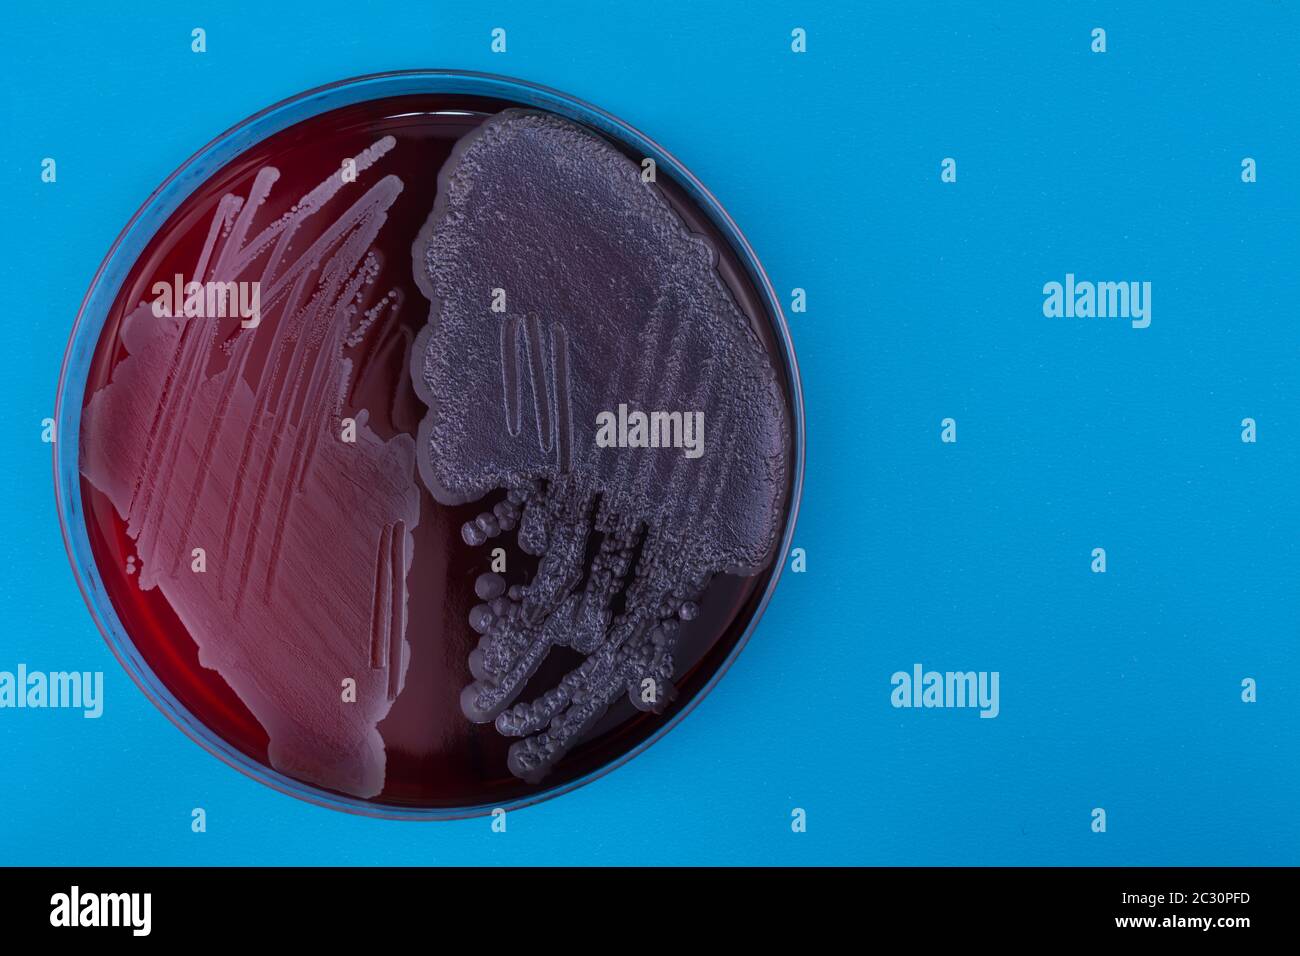 Petri dish with bacteria on blue background. Staphylococcus aureus and pseudomonas aeruginosa bacteria on agar plate Stock Photo